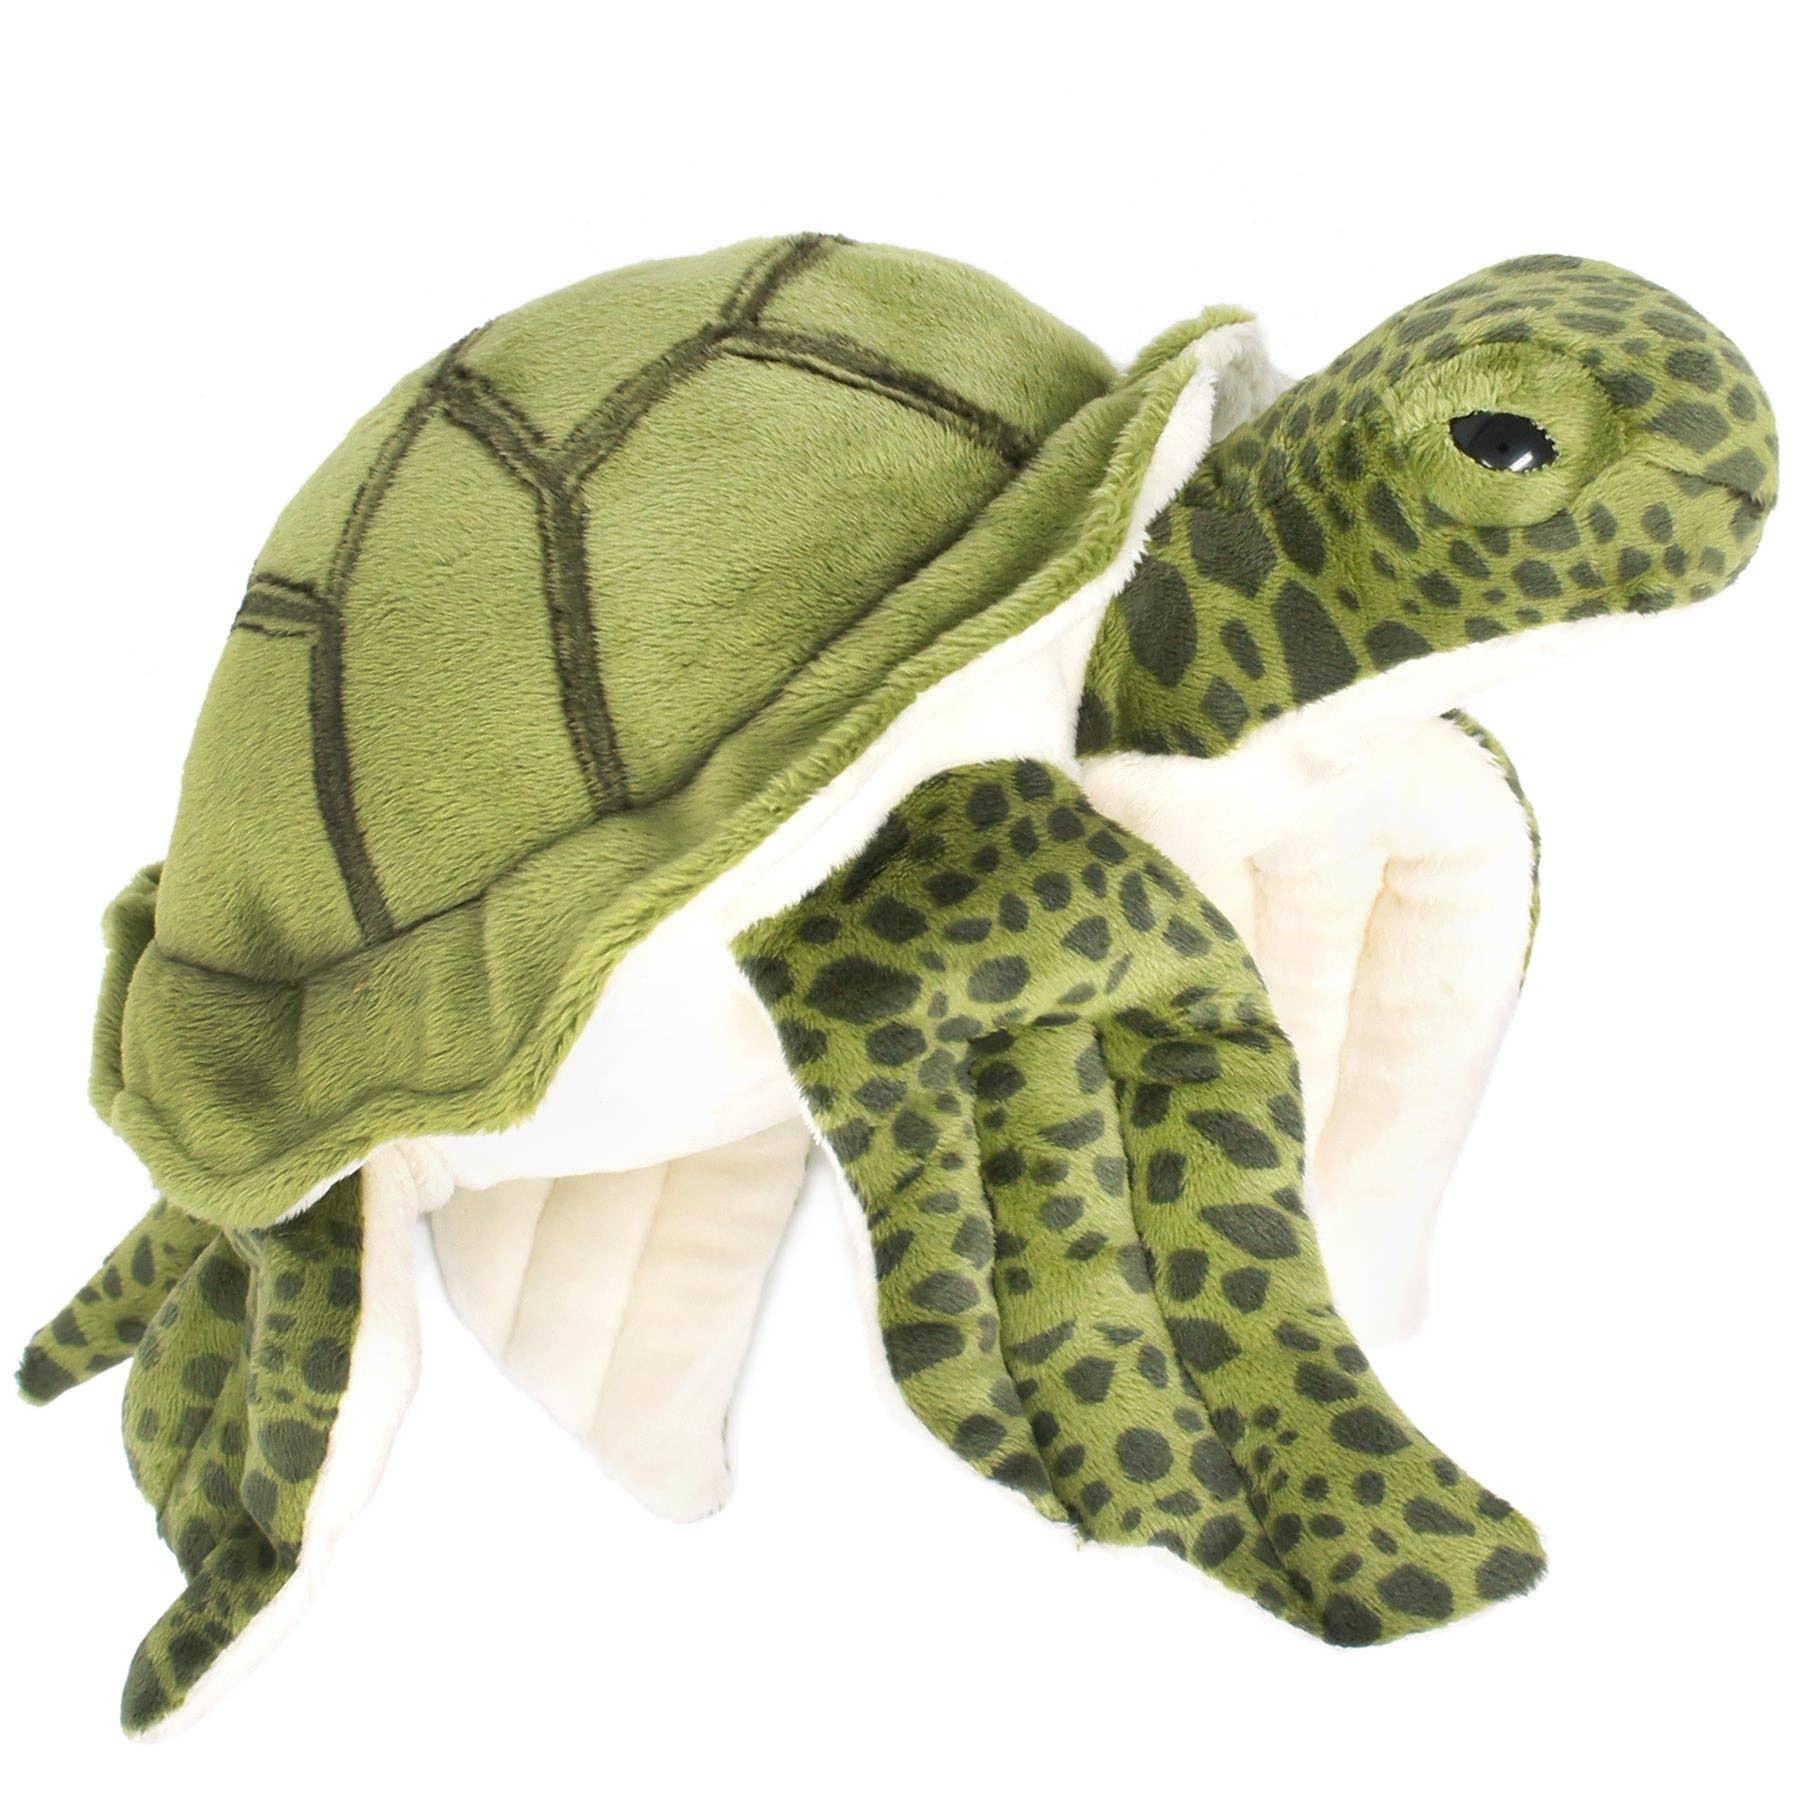 Turquoise The Green Sea Turtle 10" Stuffed Animal Plus